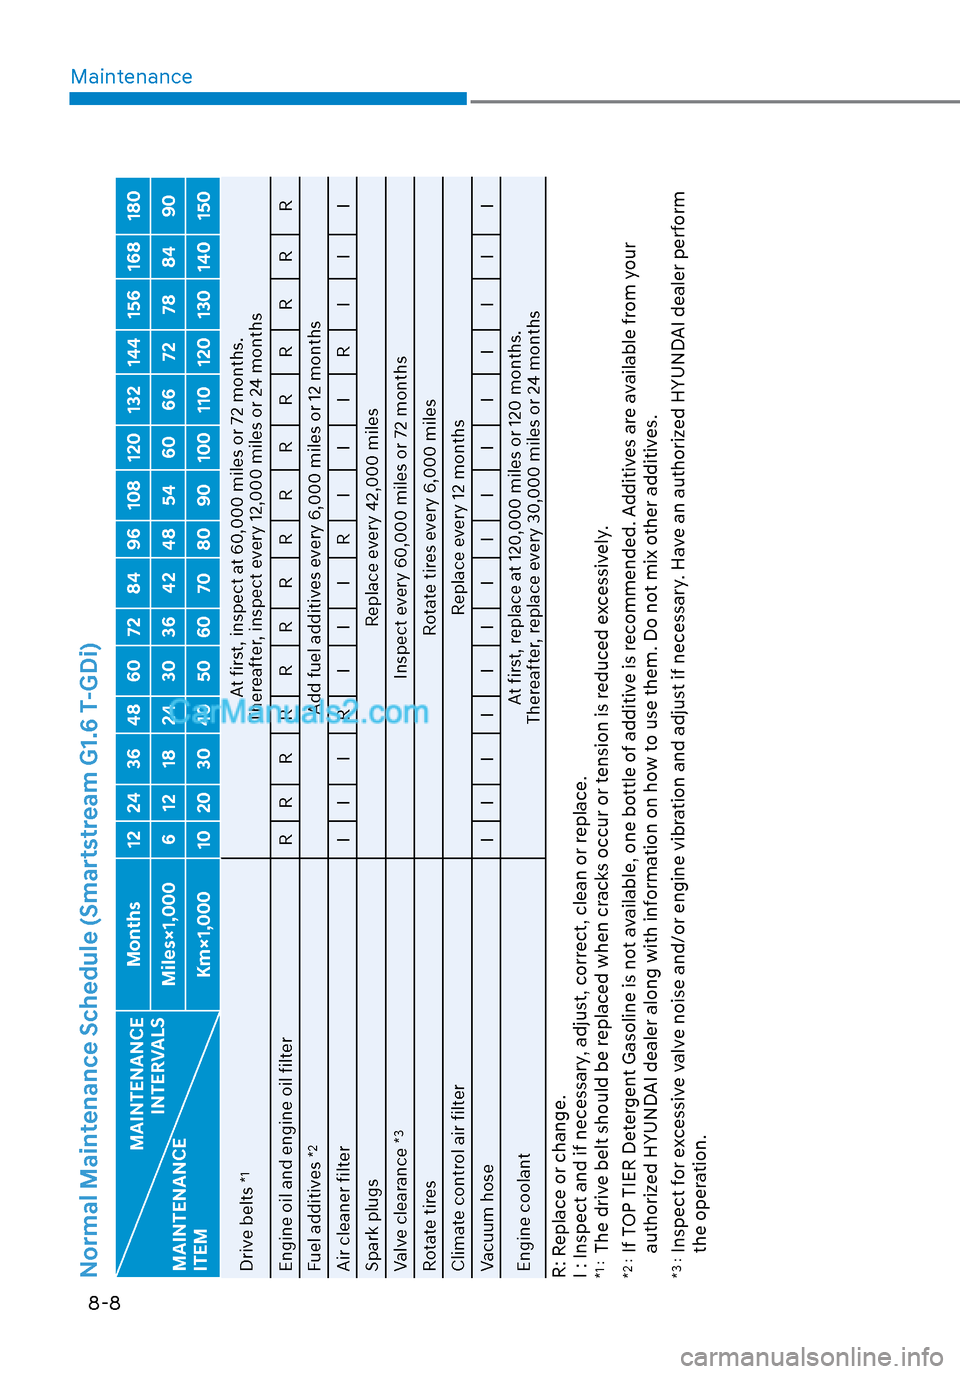 Hyundai Sonata 2020  Owners Manual Maintenance8-8
Normal Maintenance Schedule (Smartstream G1.6 T-GDi)
MAINTENANCE  INTERVALS
MAINTENANCE 
ITEM Months 12 24 36 48 60 72 84 96 108 120 132 144 156 168 180
Miles×1,000 6 12 18 24 30 36 42